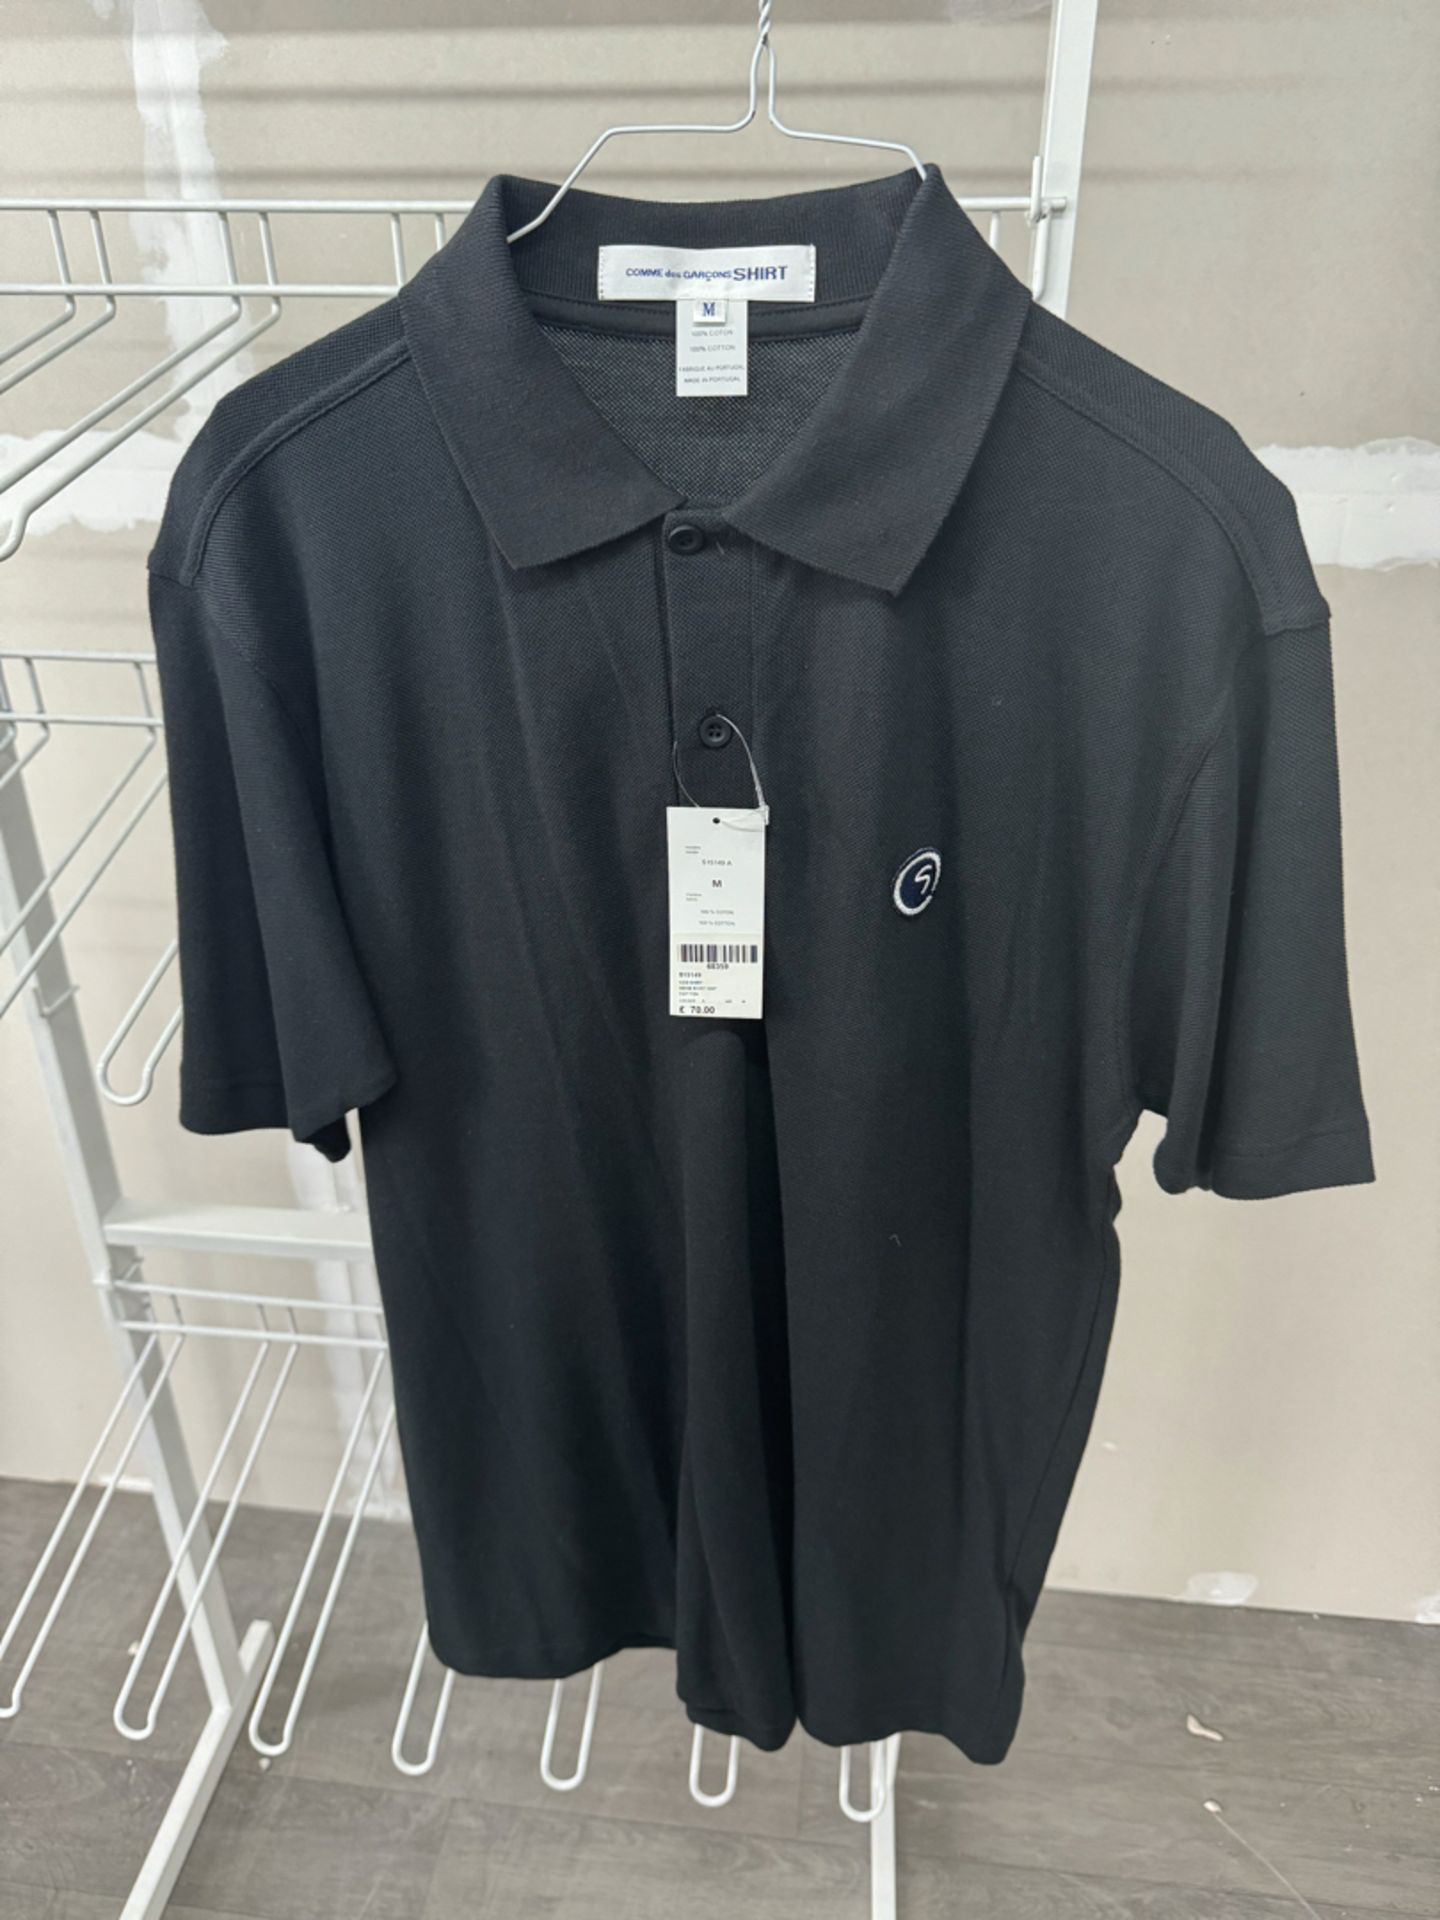 Comme Des GarÃ§ons Mens Polo Shirt - New with Tags - Size Medium (large fit) - RRP Â£70 - NO VAT!